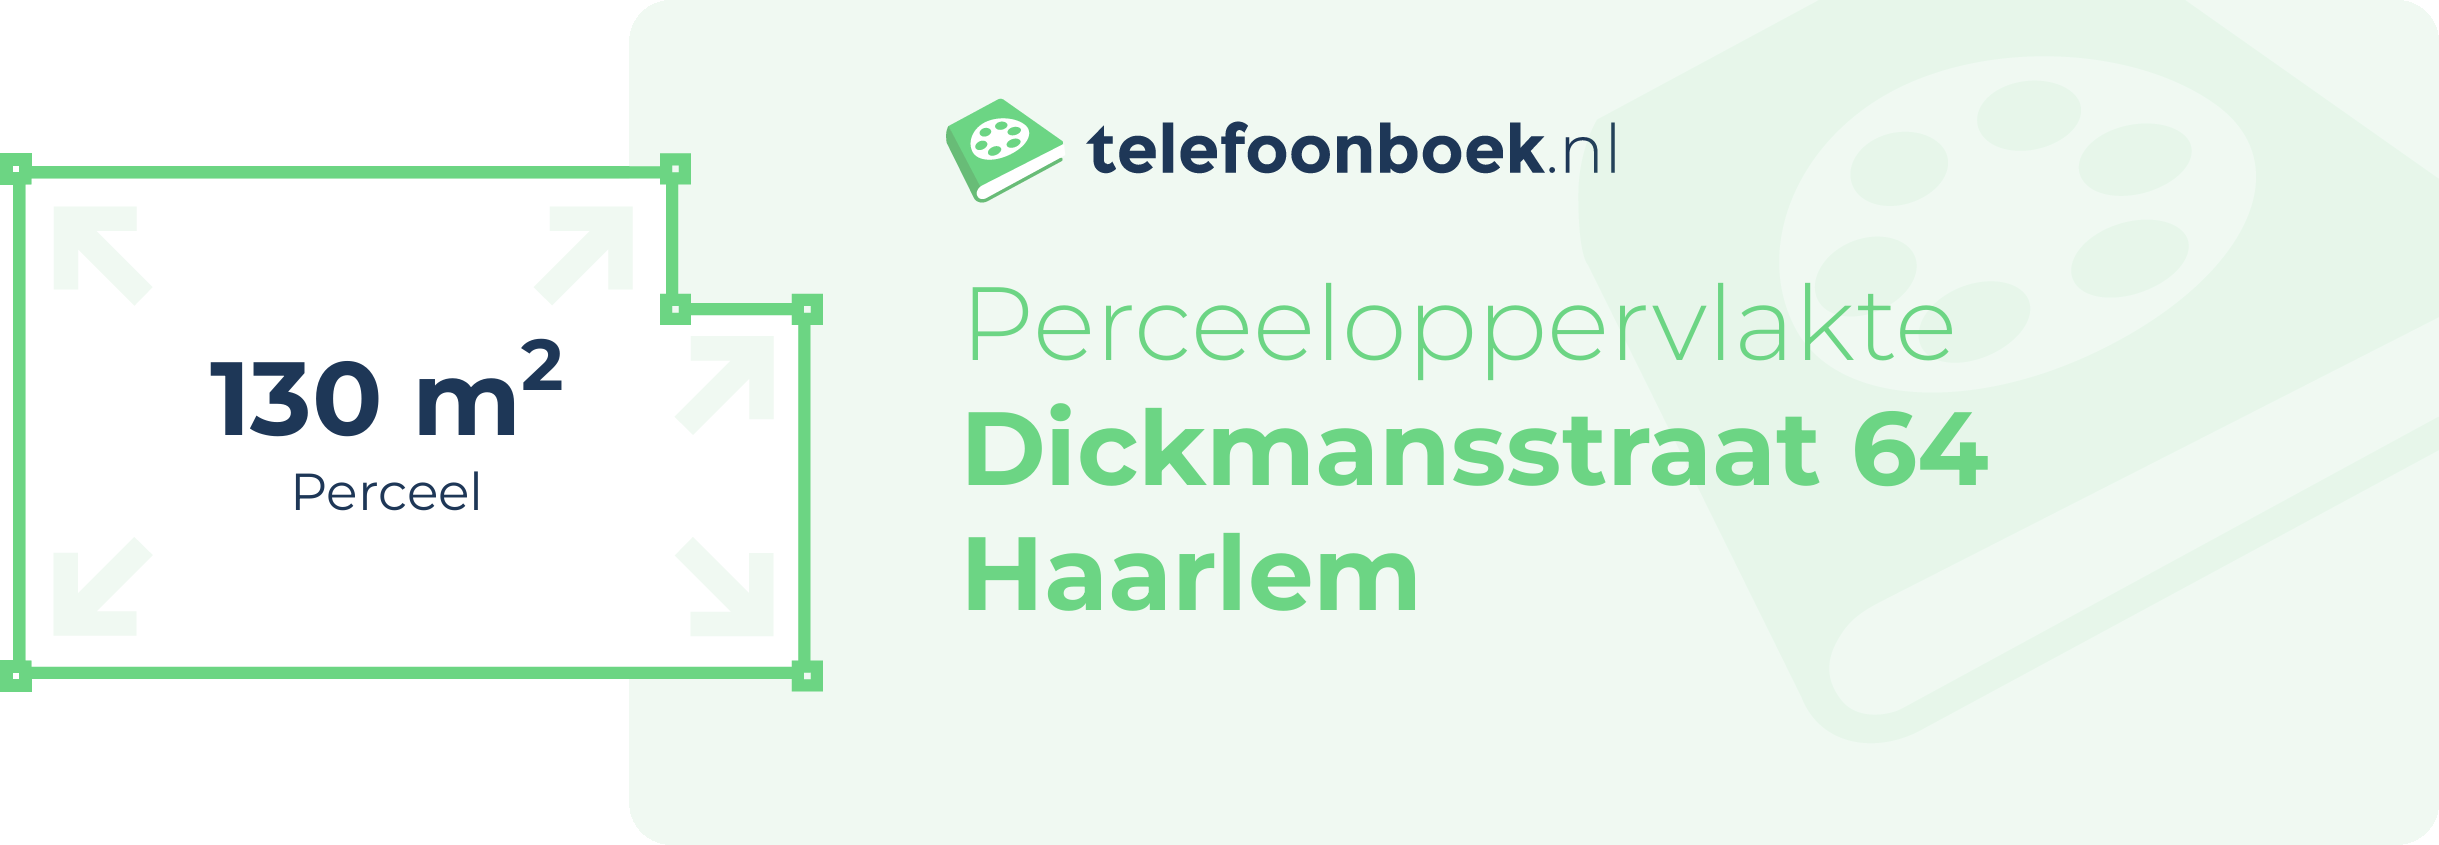 Perceeloppervlakte Dickmansstraat 64 Haarlem